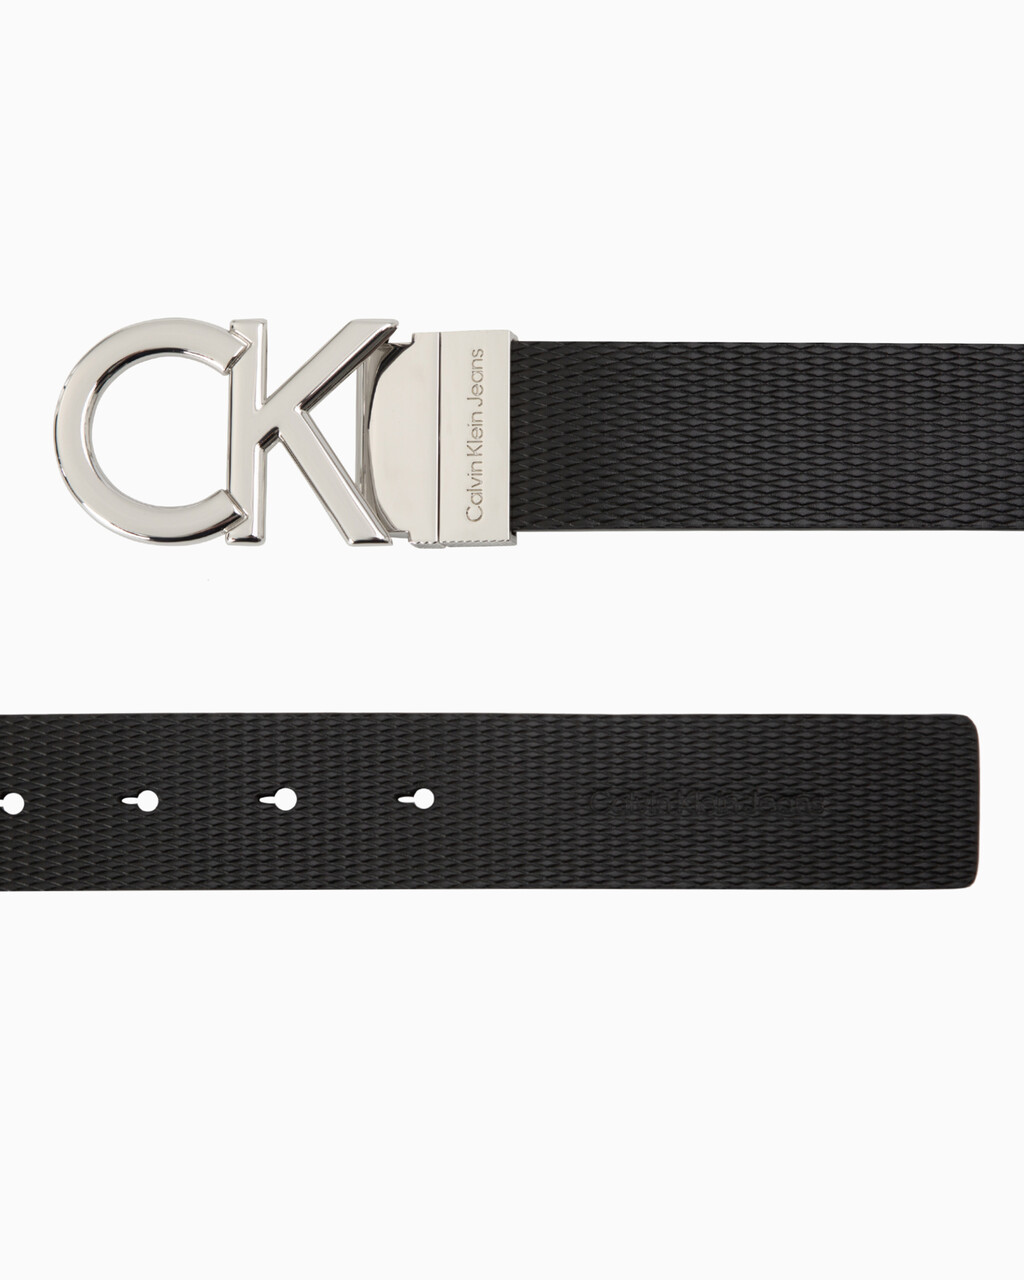 CKJ Monogram Belt, BLACK/BROWN, hi-res